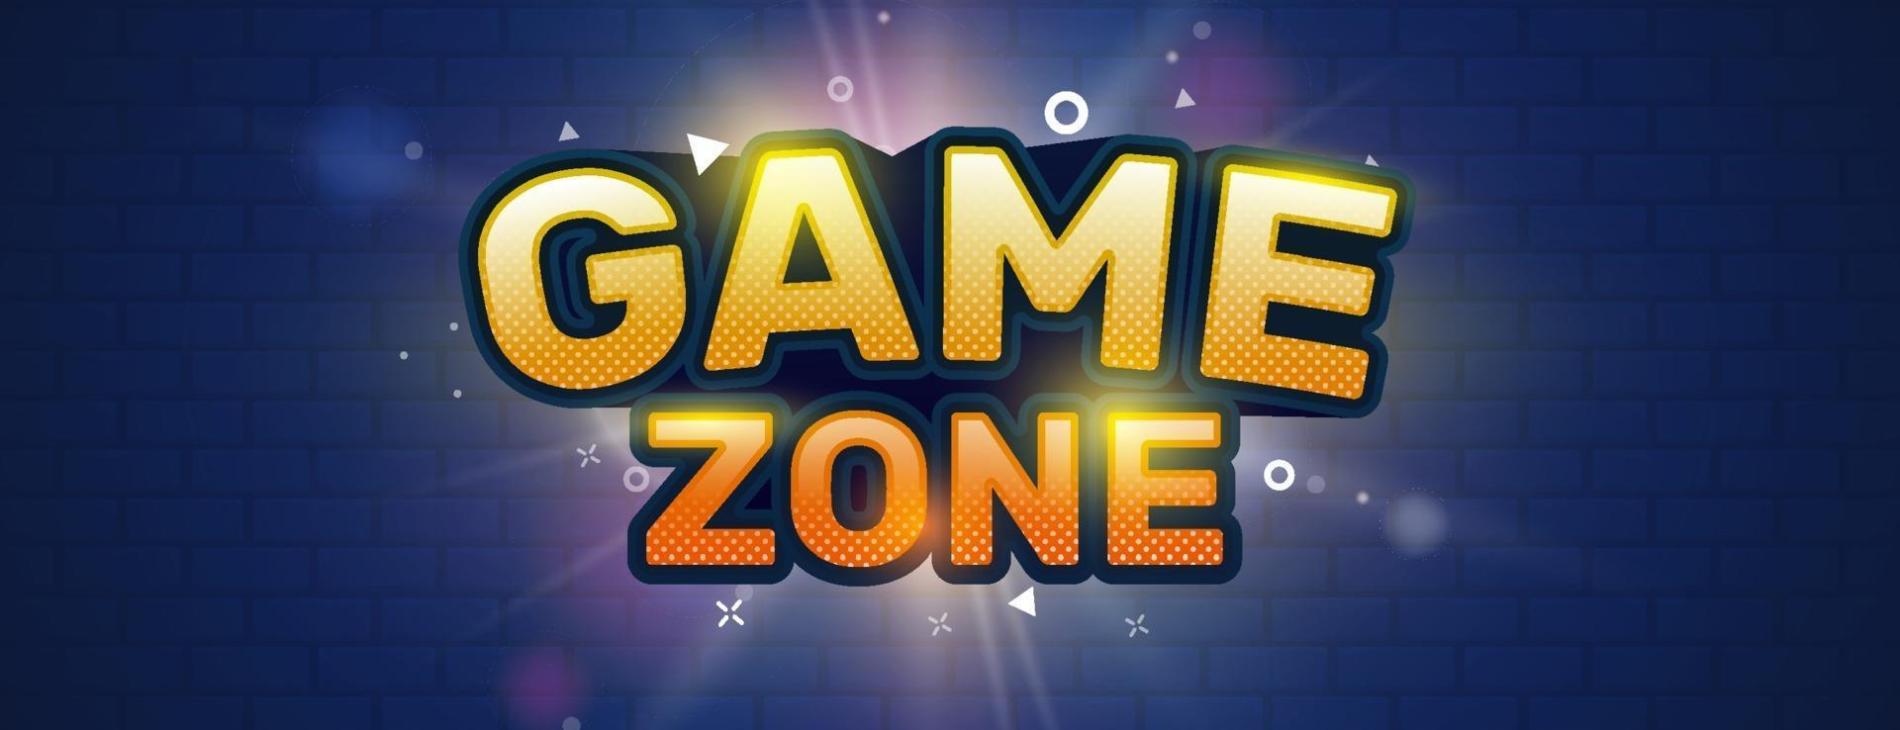 game-zone-entertainment-banner-game-logo-illustration-free-vector.jpg